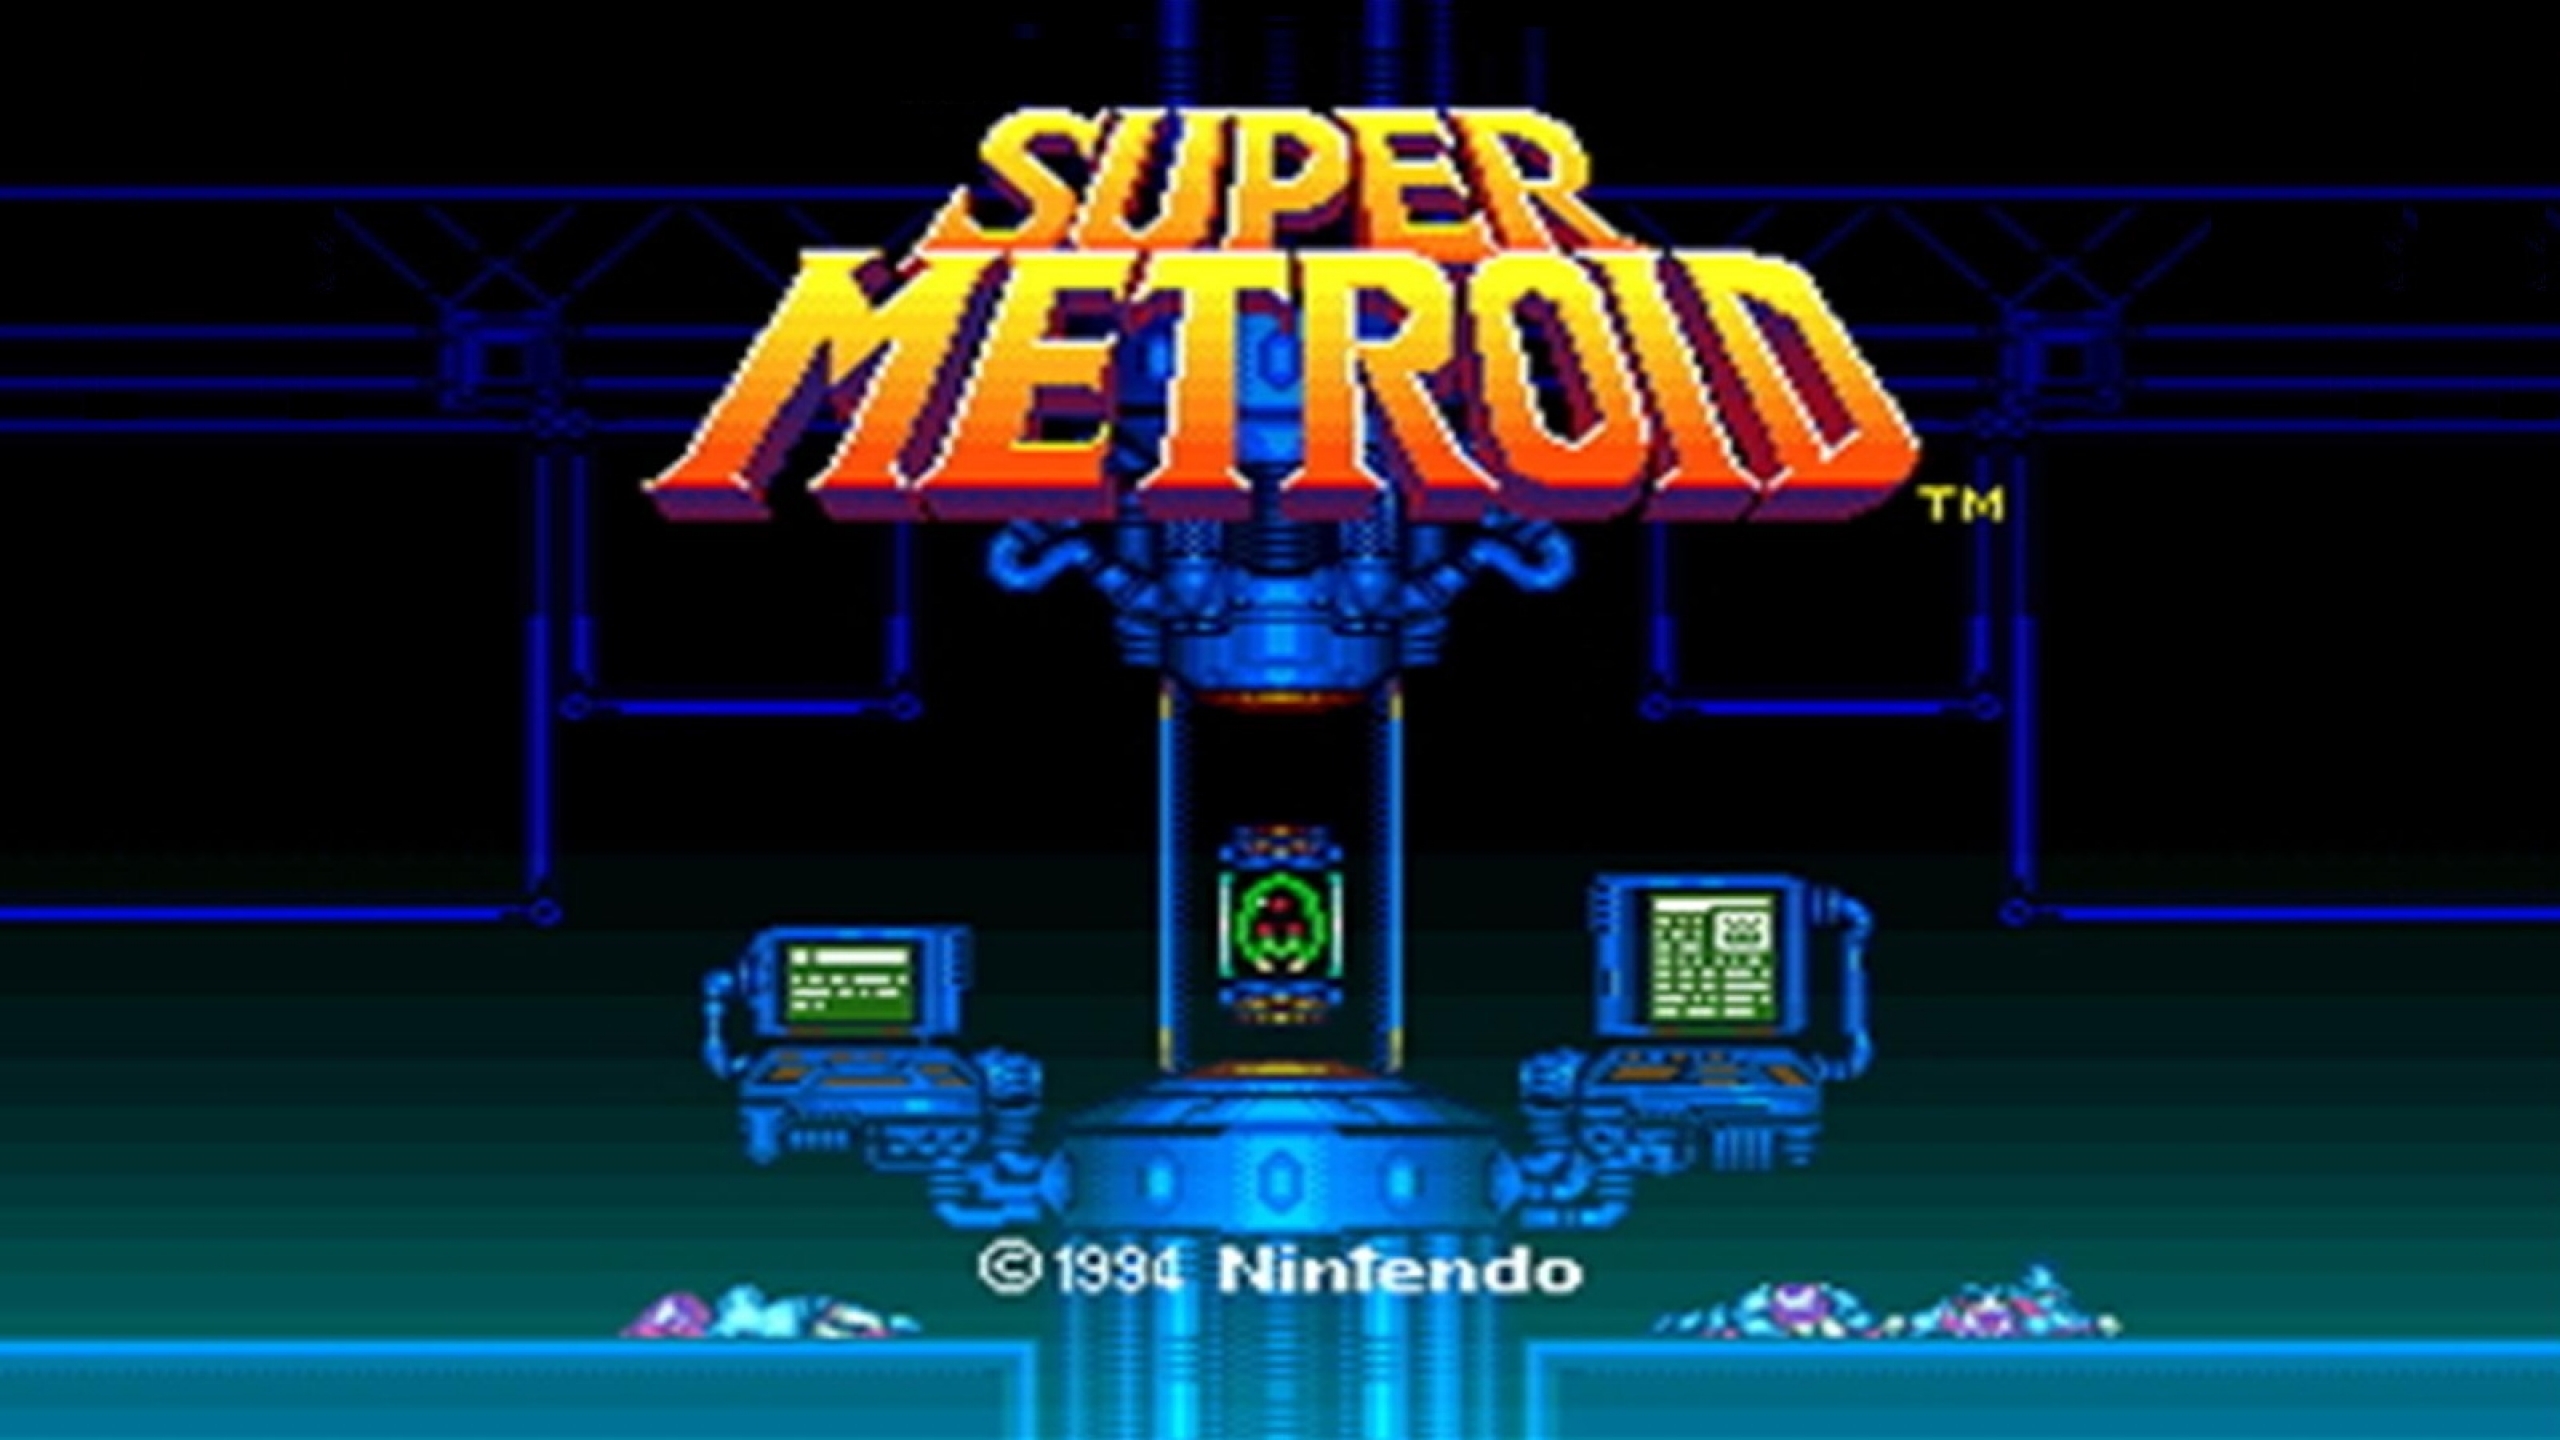 Nintendo metroid. Супер метроид Нинтендо. Игра метроид на Нинтендо. Игра Нинтендо super Metroid. Metroid 1994.